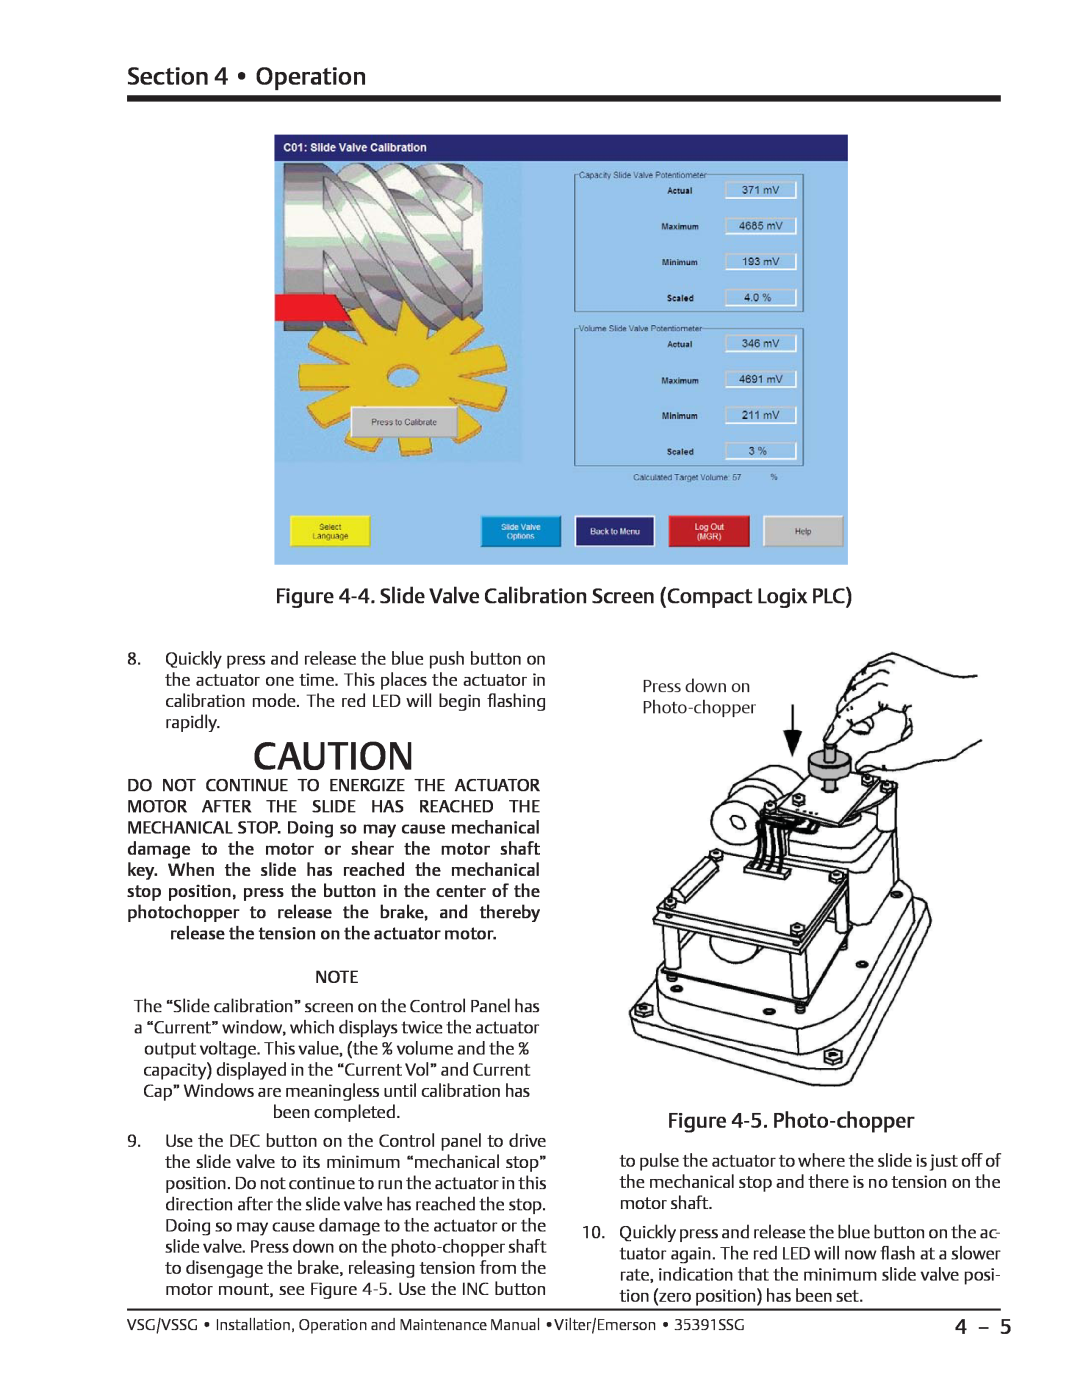 Emerson VSG, VSSG manual 4. Slide Valve Calibration Screen Compact Logix PLC, 5. Photo-chopper, Operation 